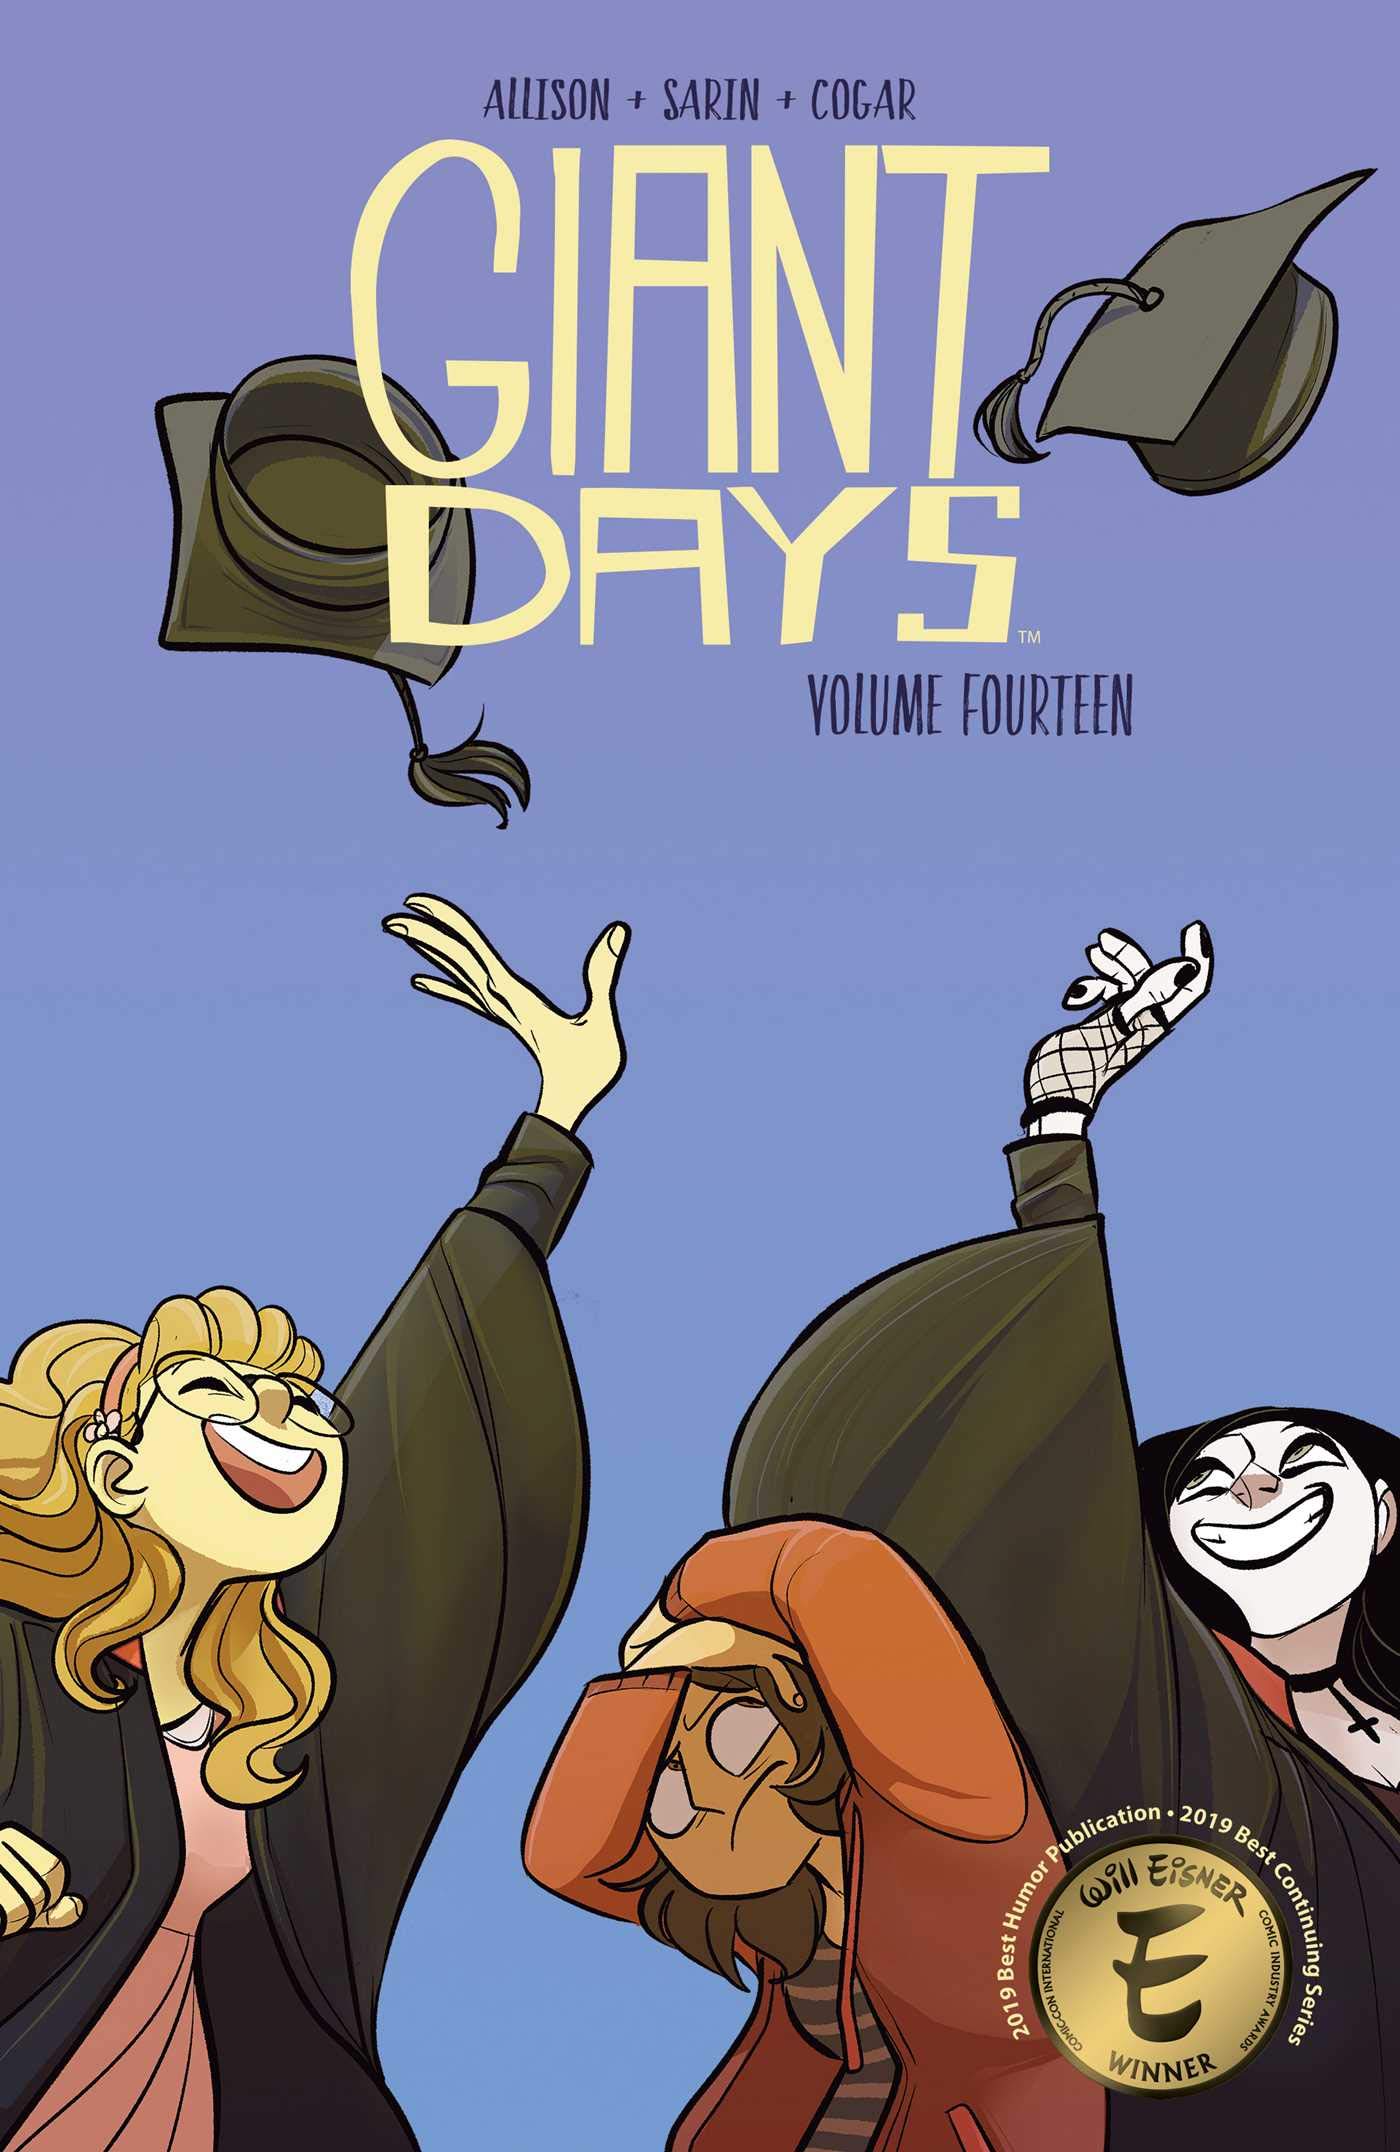 Giant Days Graphic Novel Volume 14